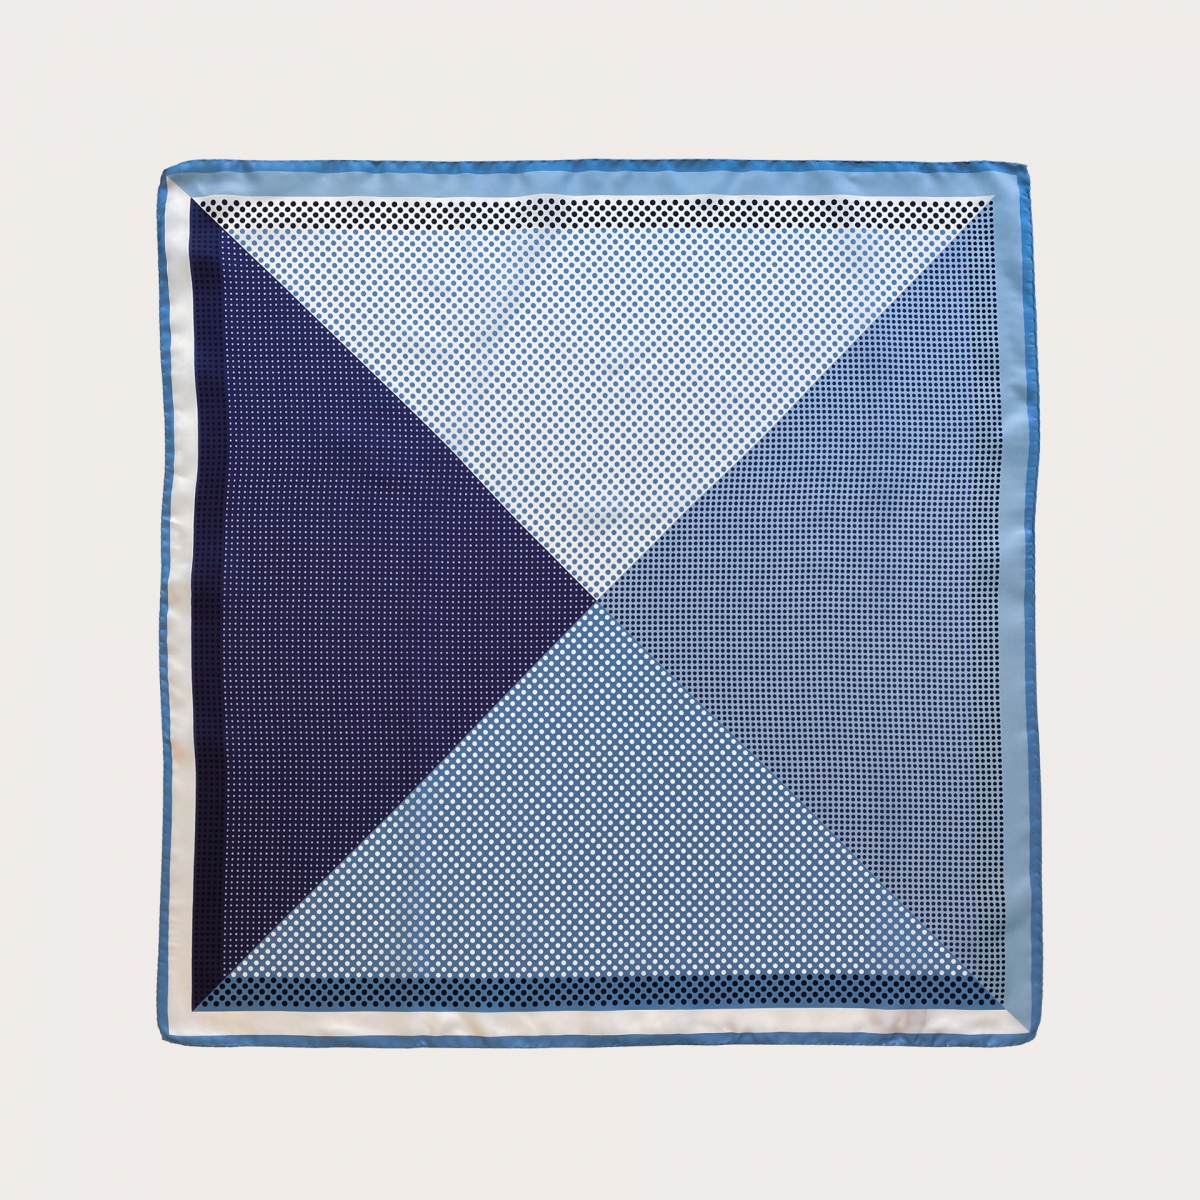 BRUCLE Silk foulard, blue polka dot pattern